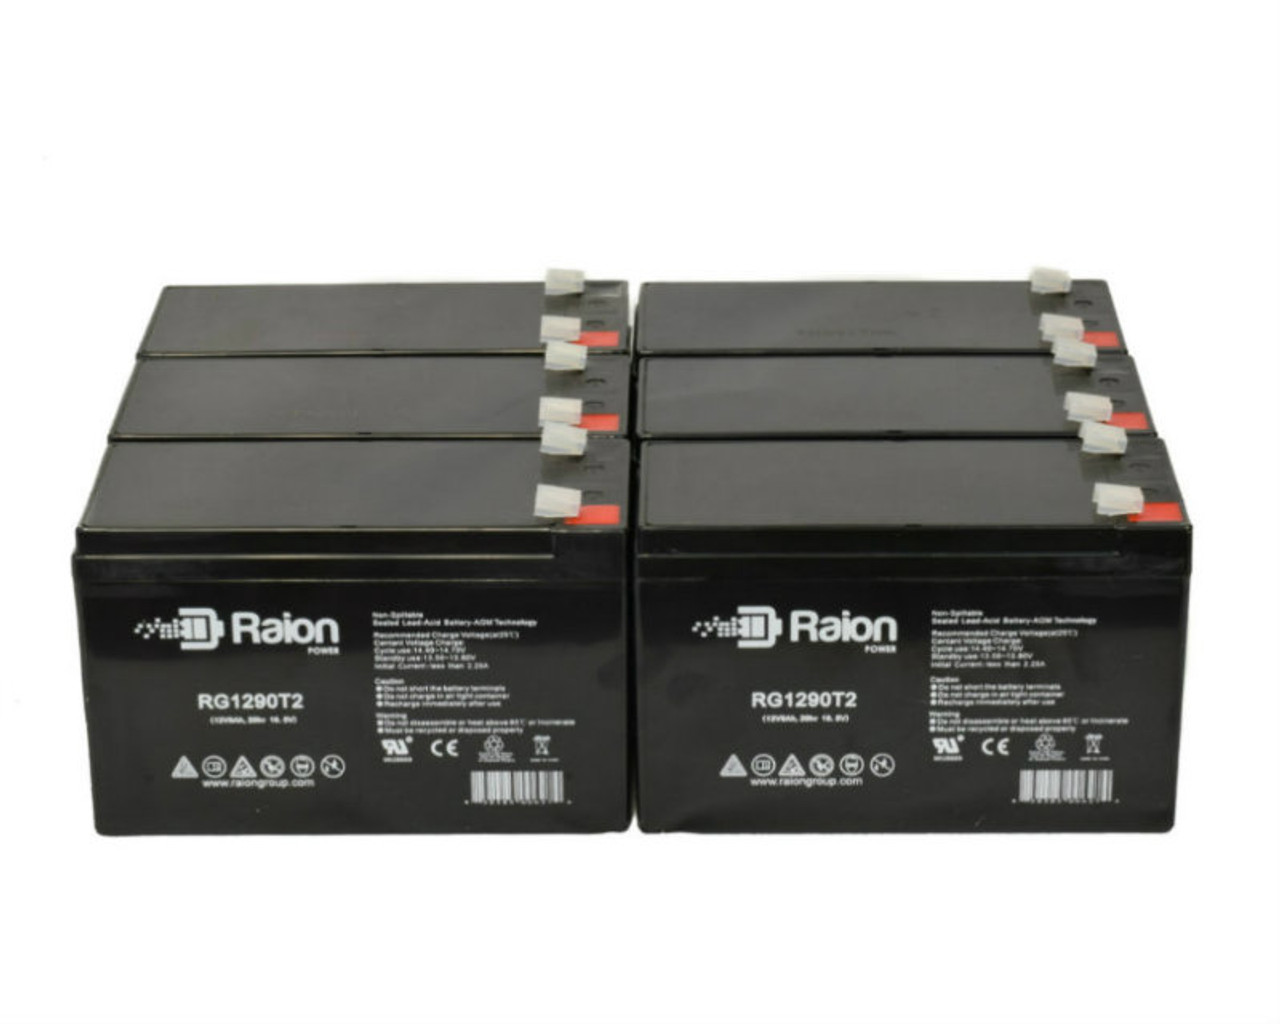 Raion Power Replacement 12V 9Ah Battery for Jupiter Batteries JB12-009F2 - 6 Pack